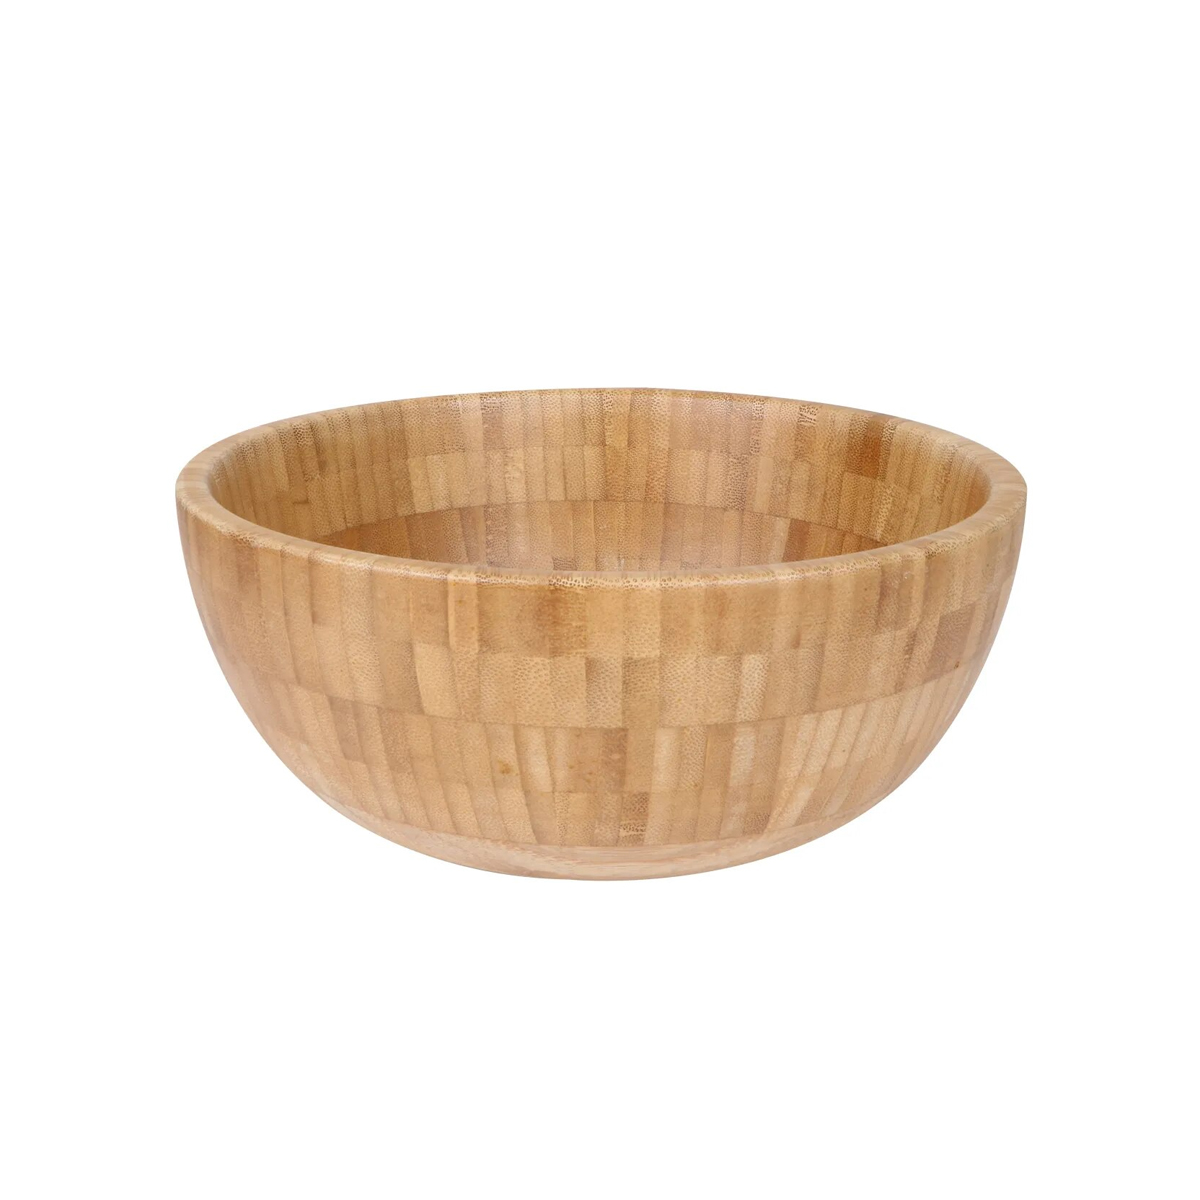 Bowls Serving Wooden Salad Wood Cereal Bamboo Frui...